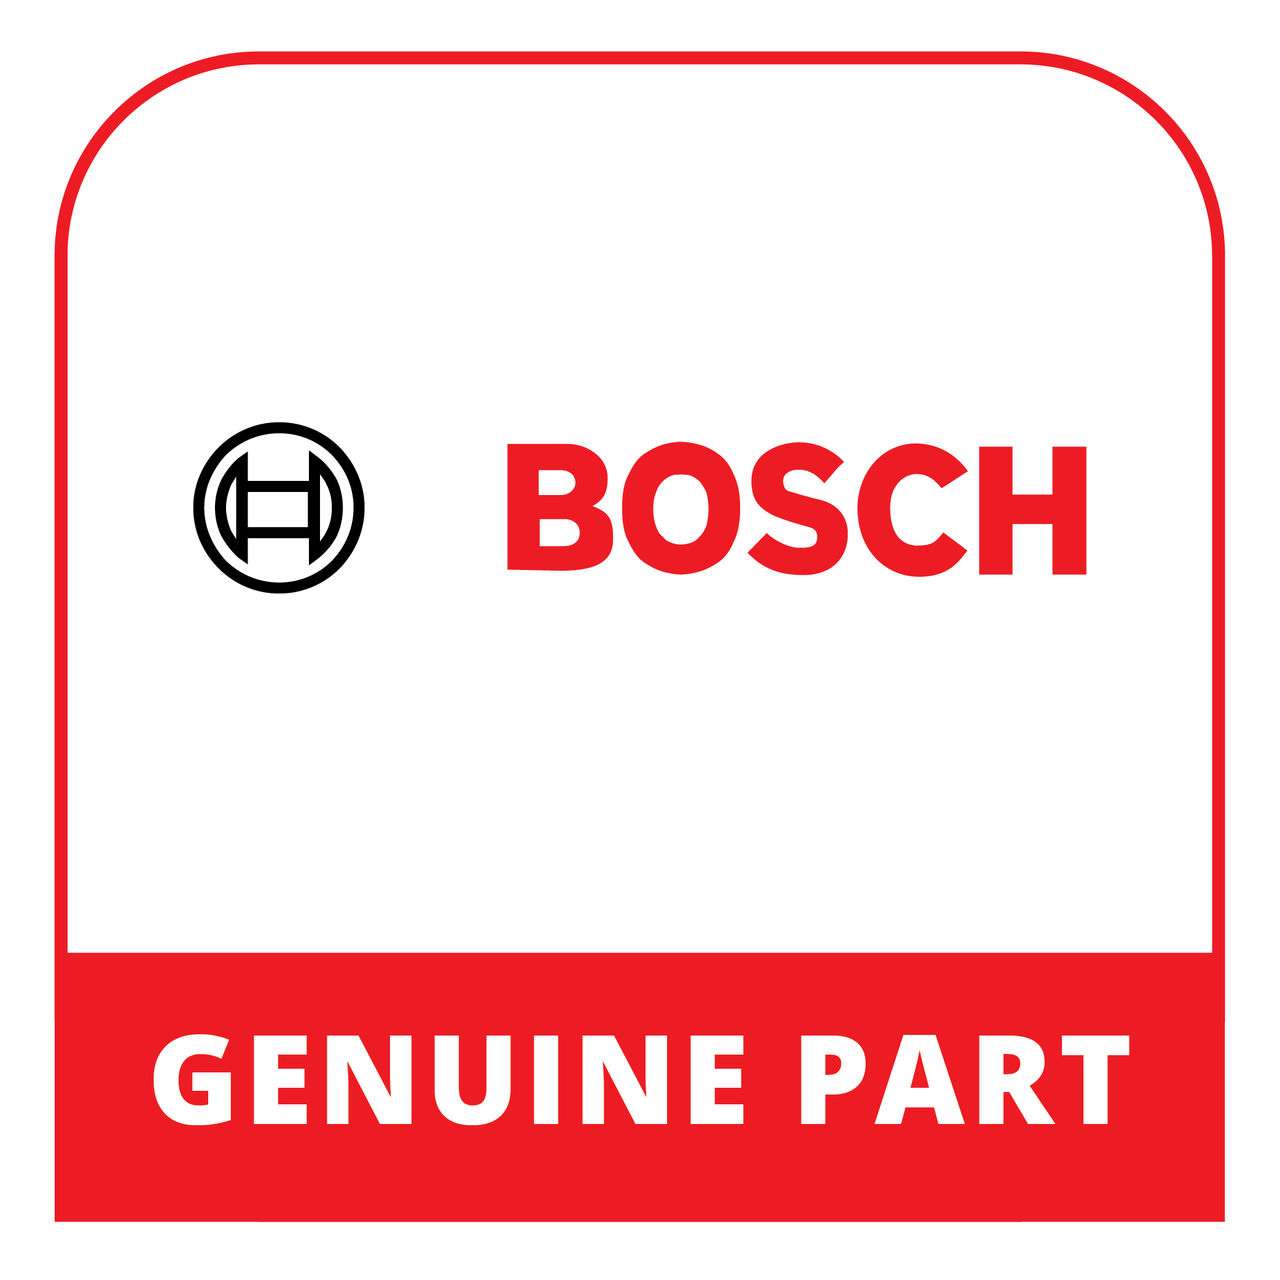 Bosch (Thermador) 20004134 - Case-Bottom - Genuine Bosch (Thermador) Part